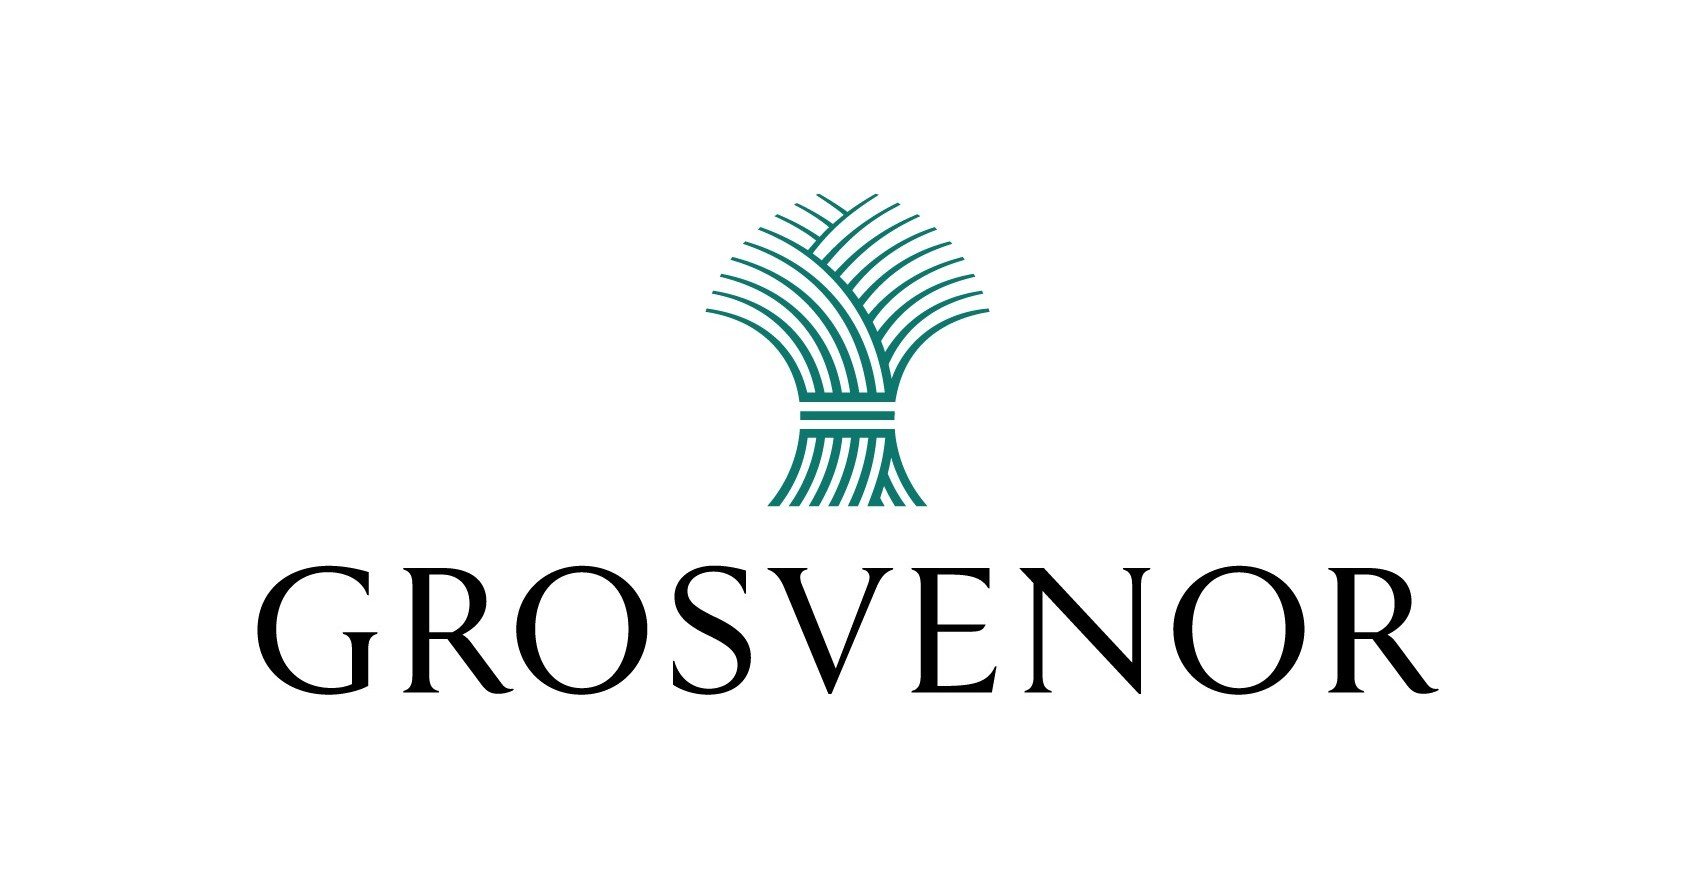 Grosvenor_Grosvenor_delivers_significant_improvement_in_financia.jpg